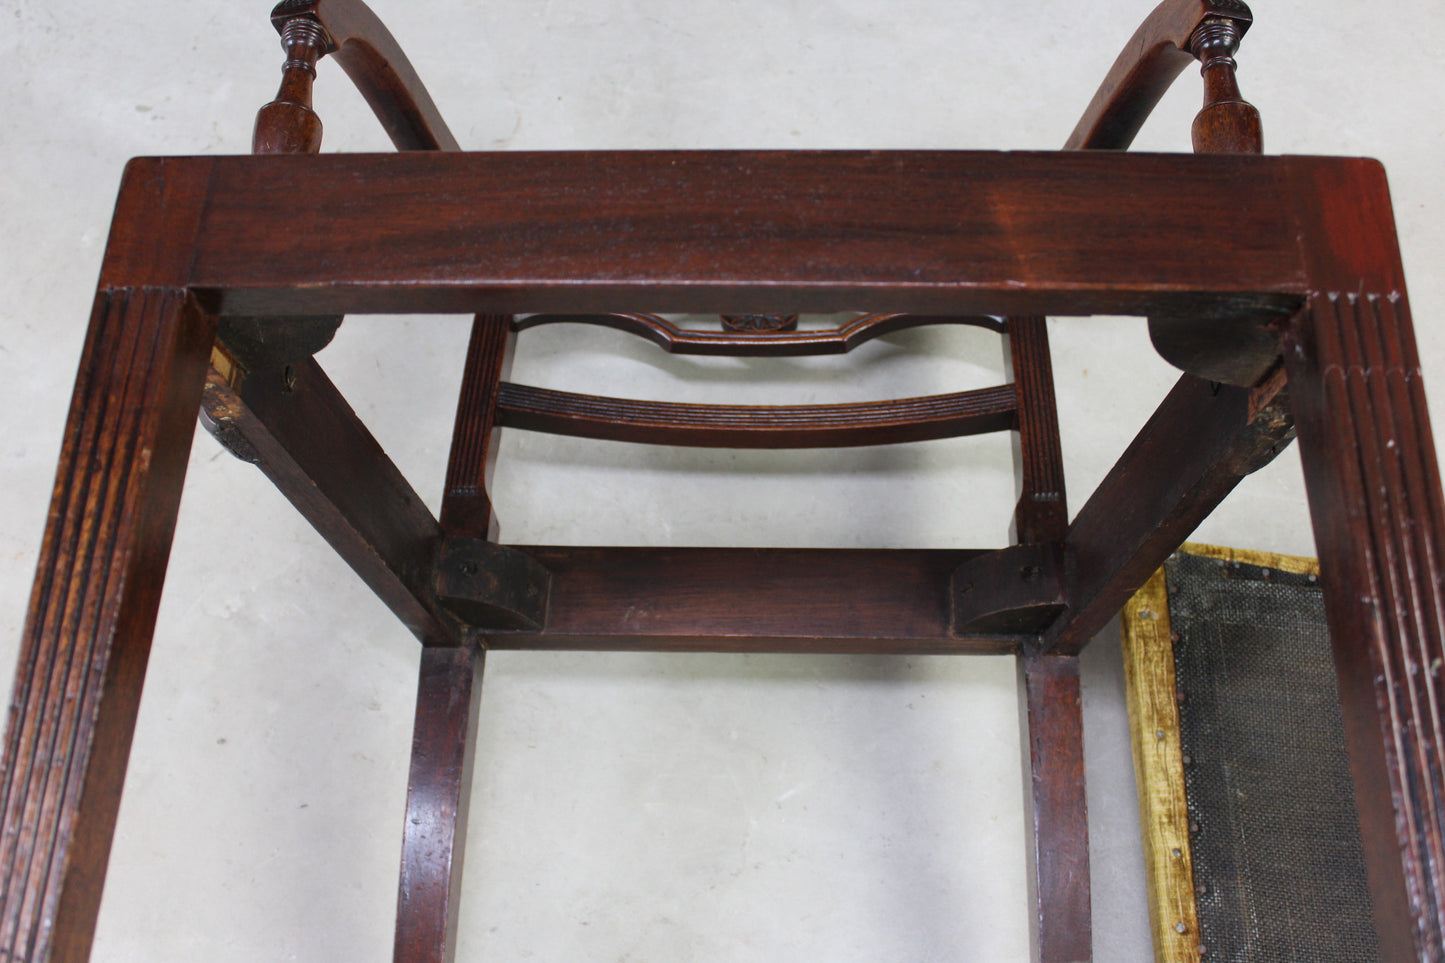 Single Mahogany Carver Dining Chair - Kernow Furniture